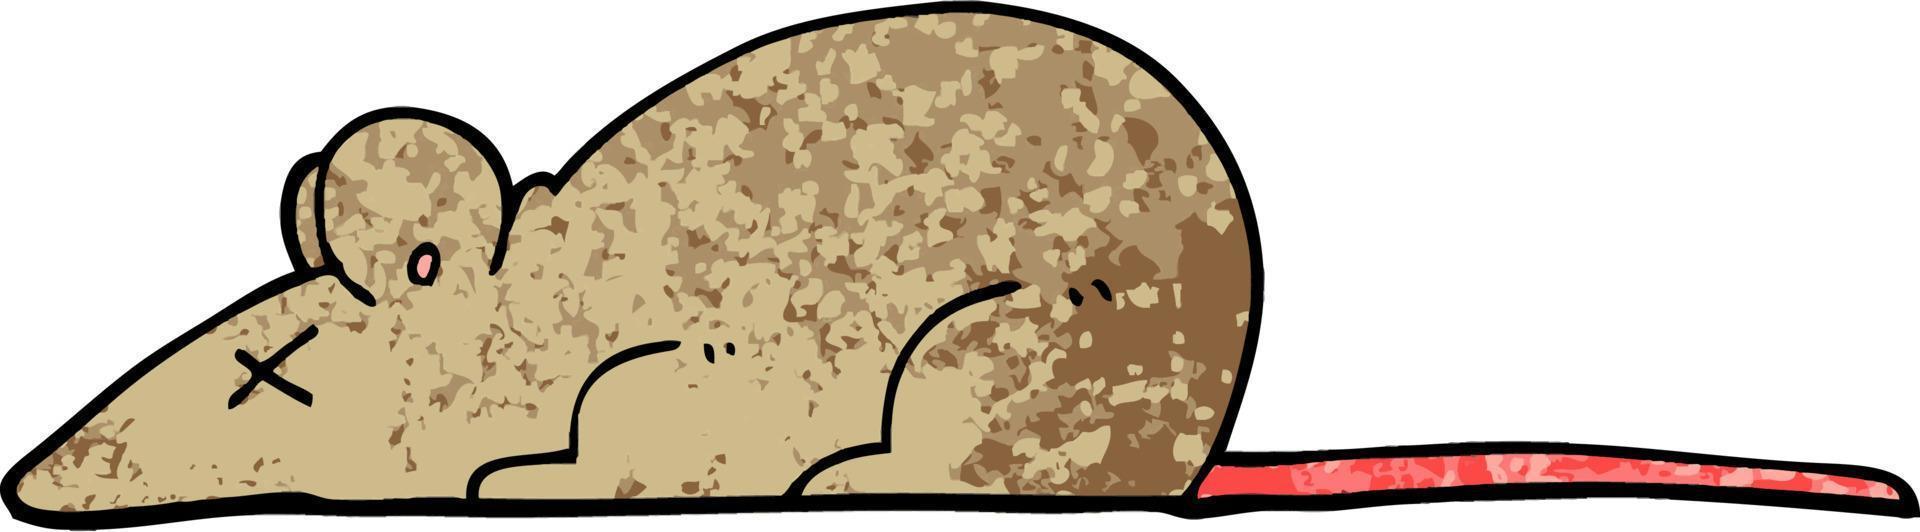 grunge textured illustration cartoon dead rat vector